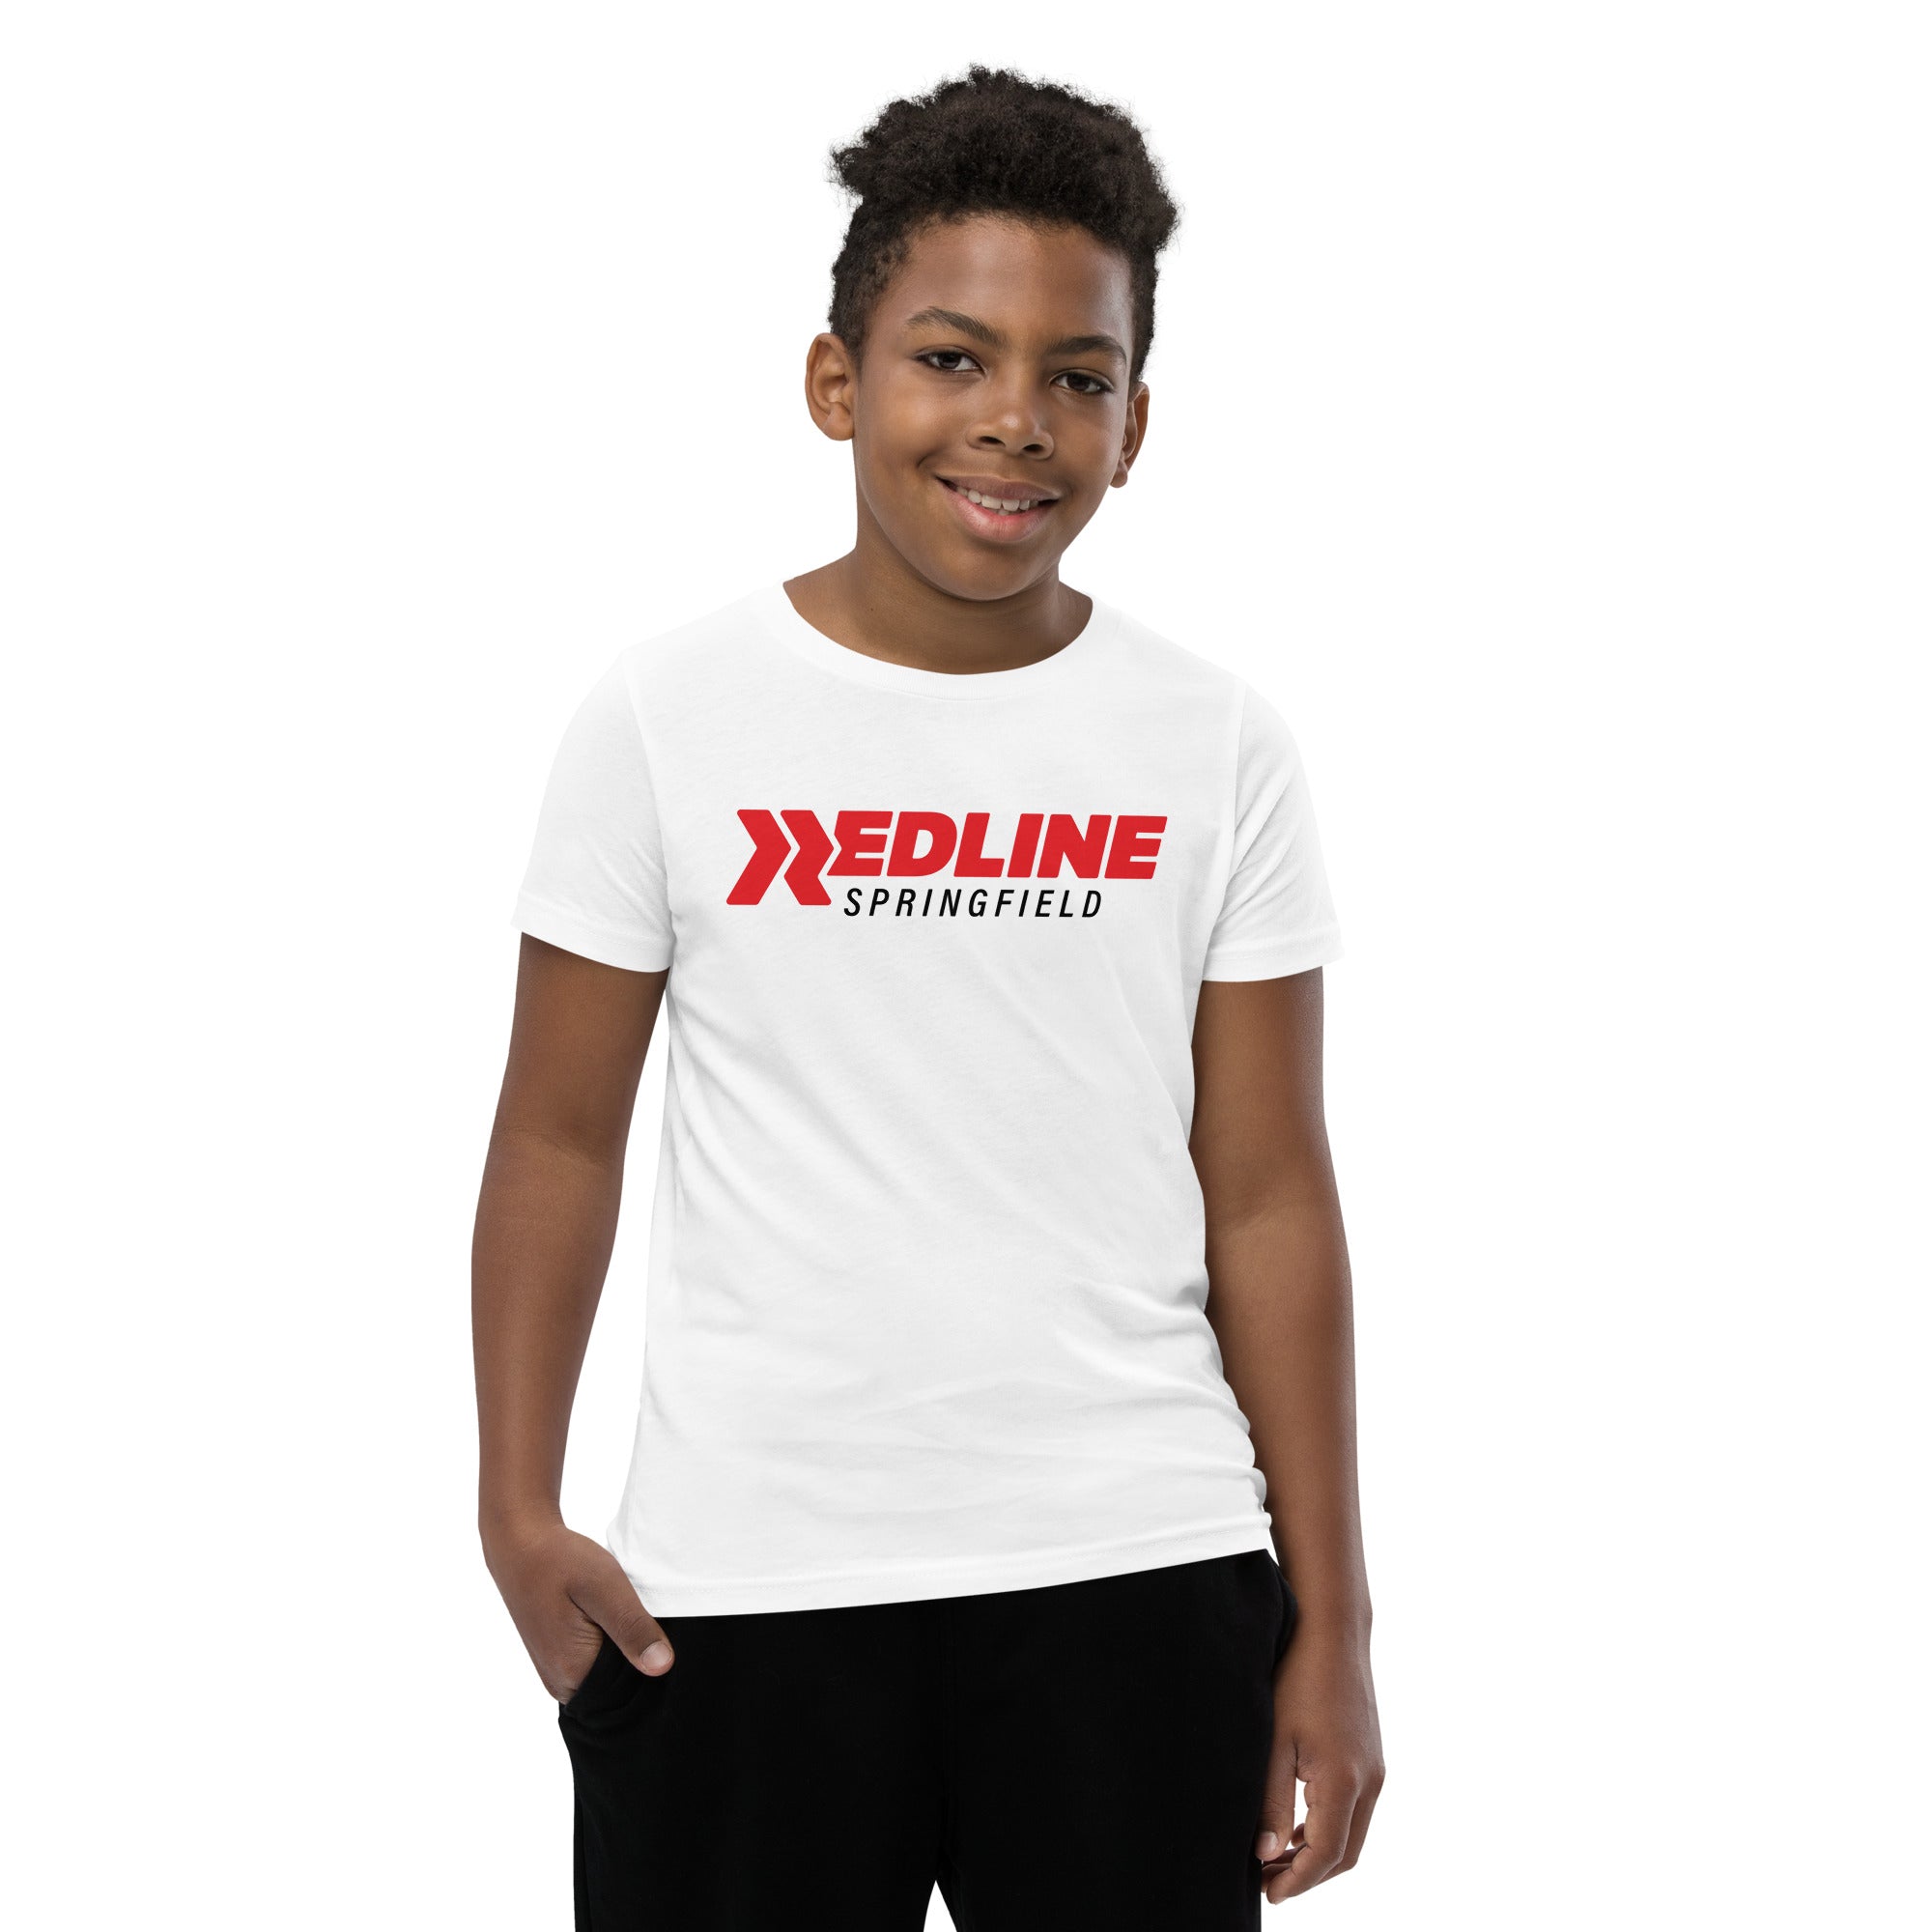 Springfield R/B Logo - White Youth Short Sleeve T-Shirt